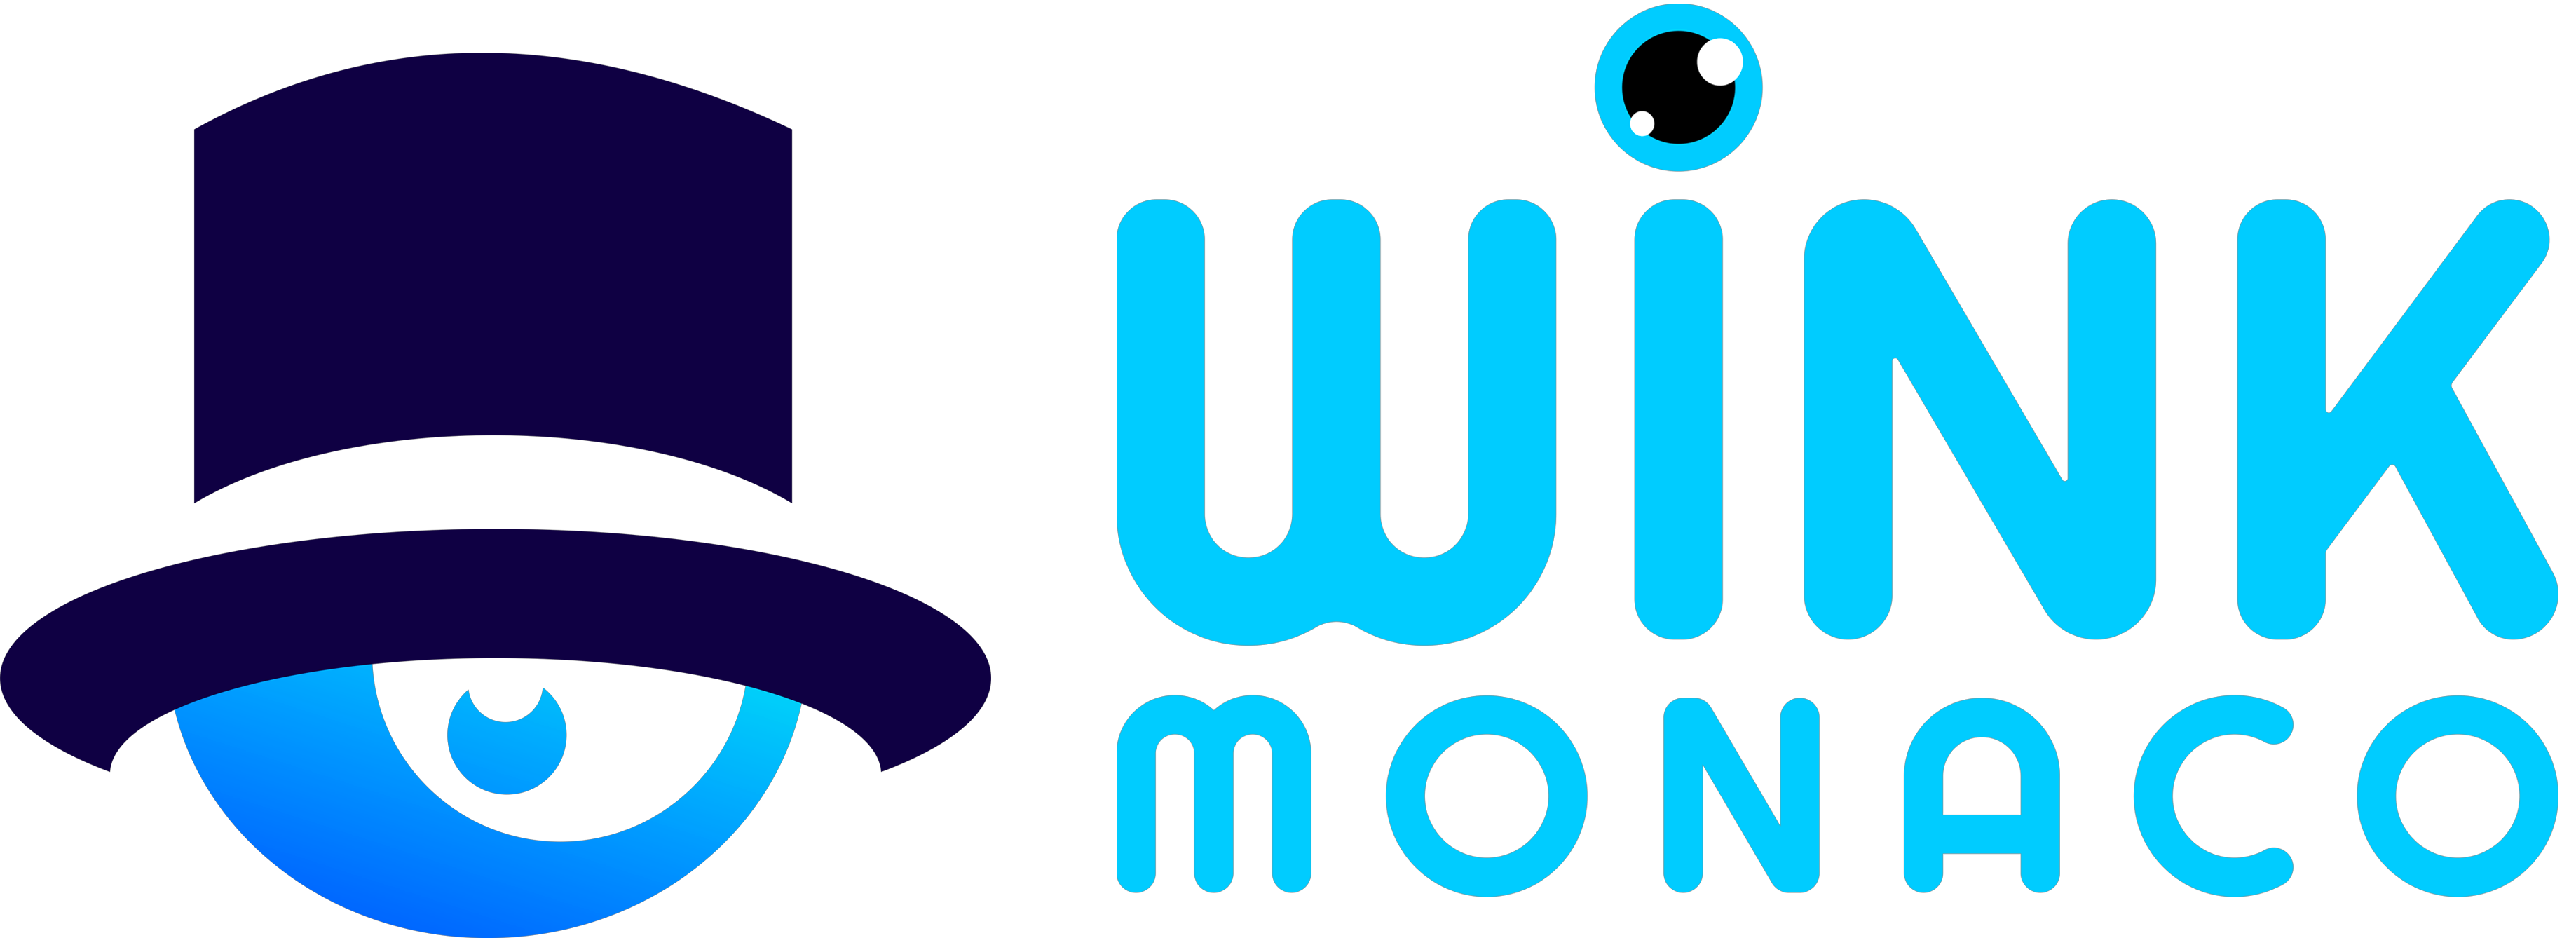 Wink Logo